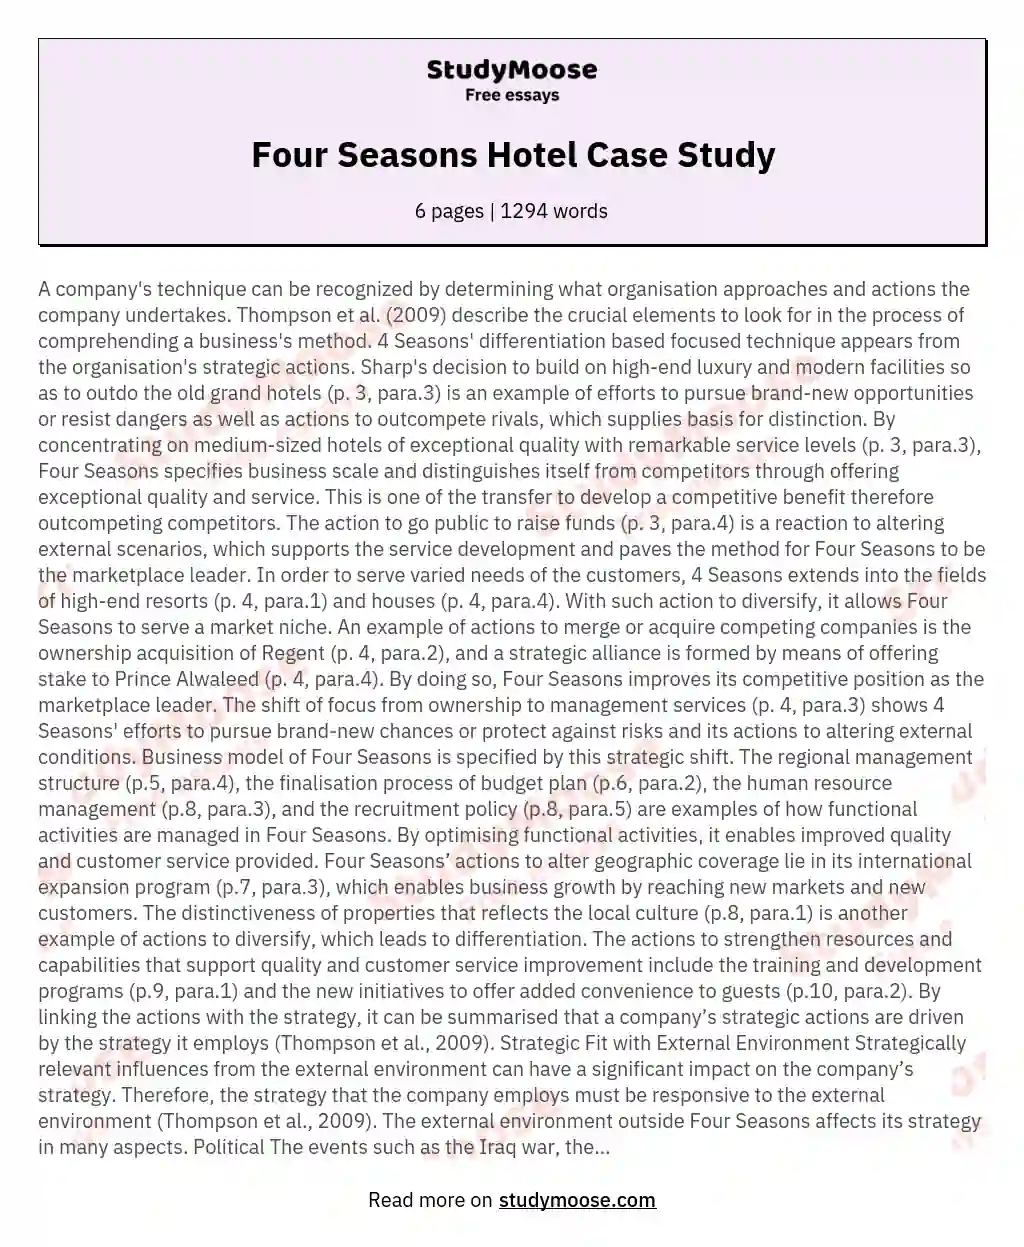 Four Seasons Hotel Case Study